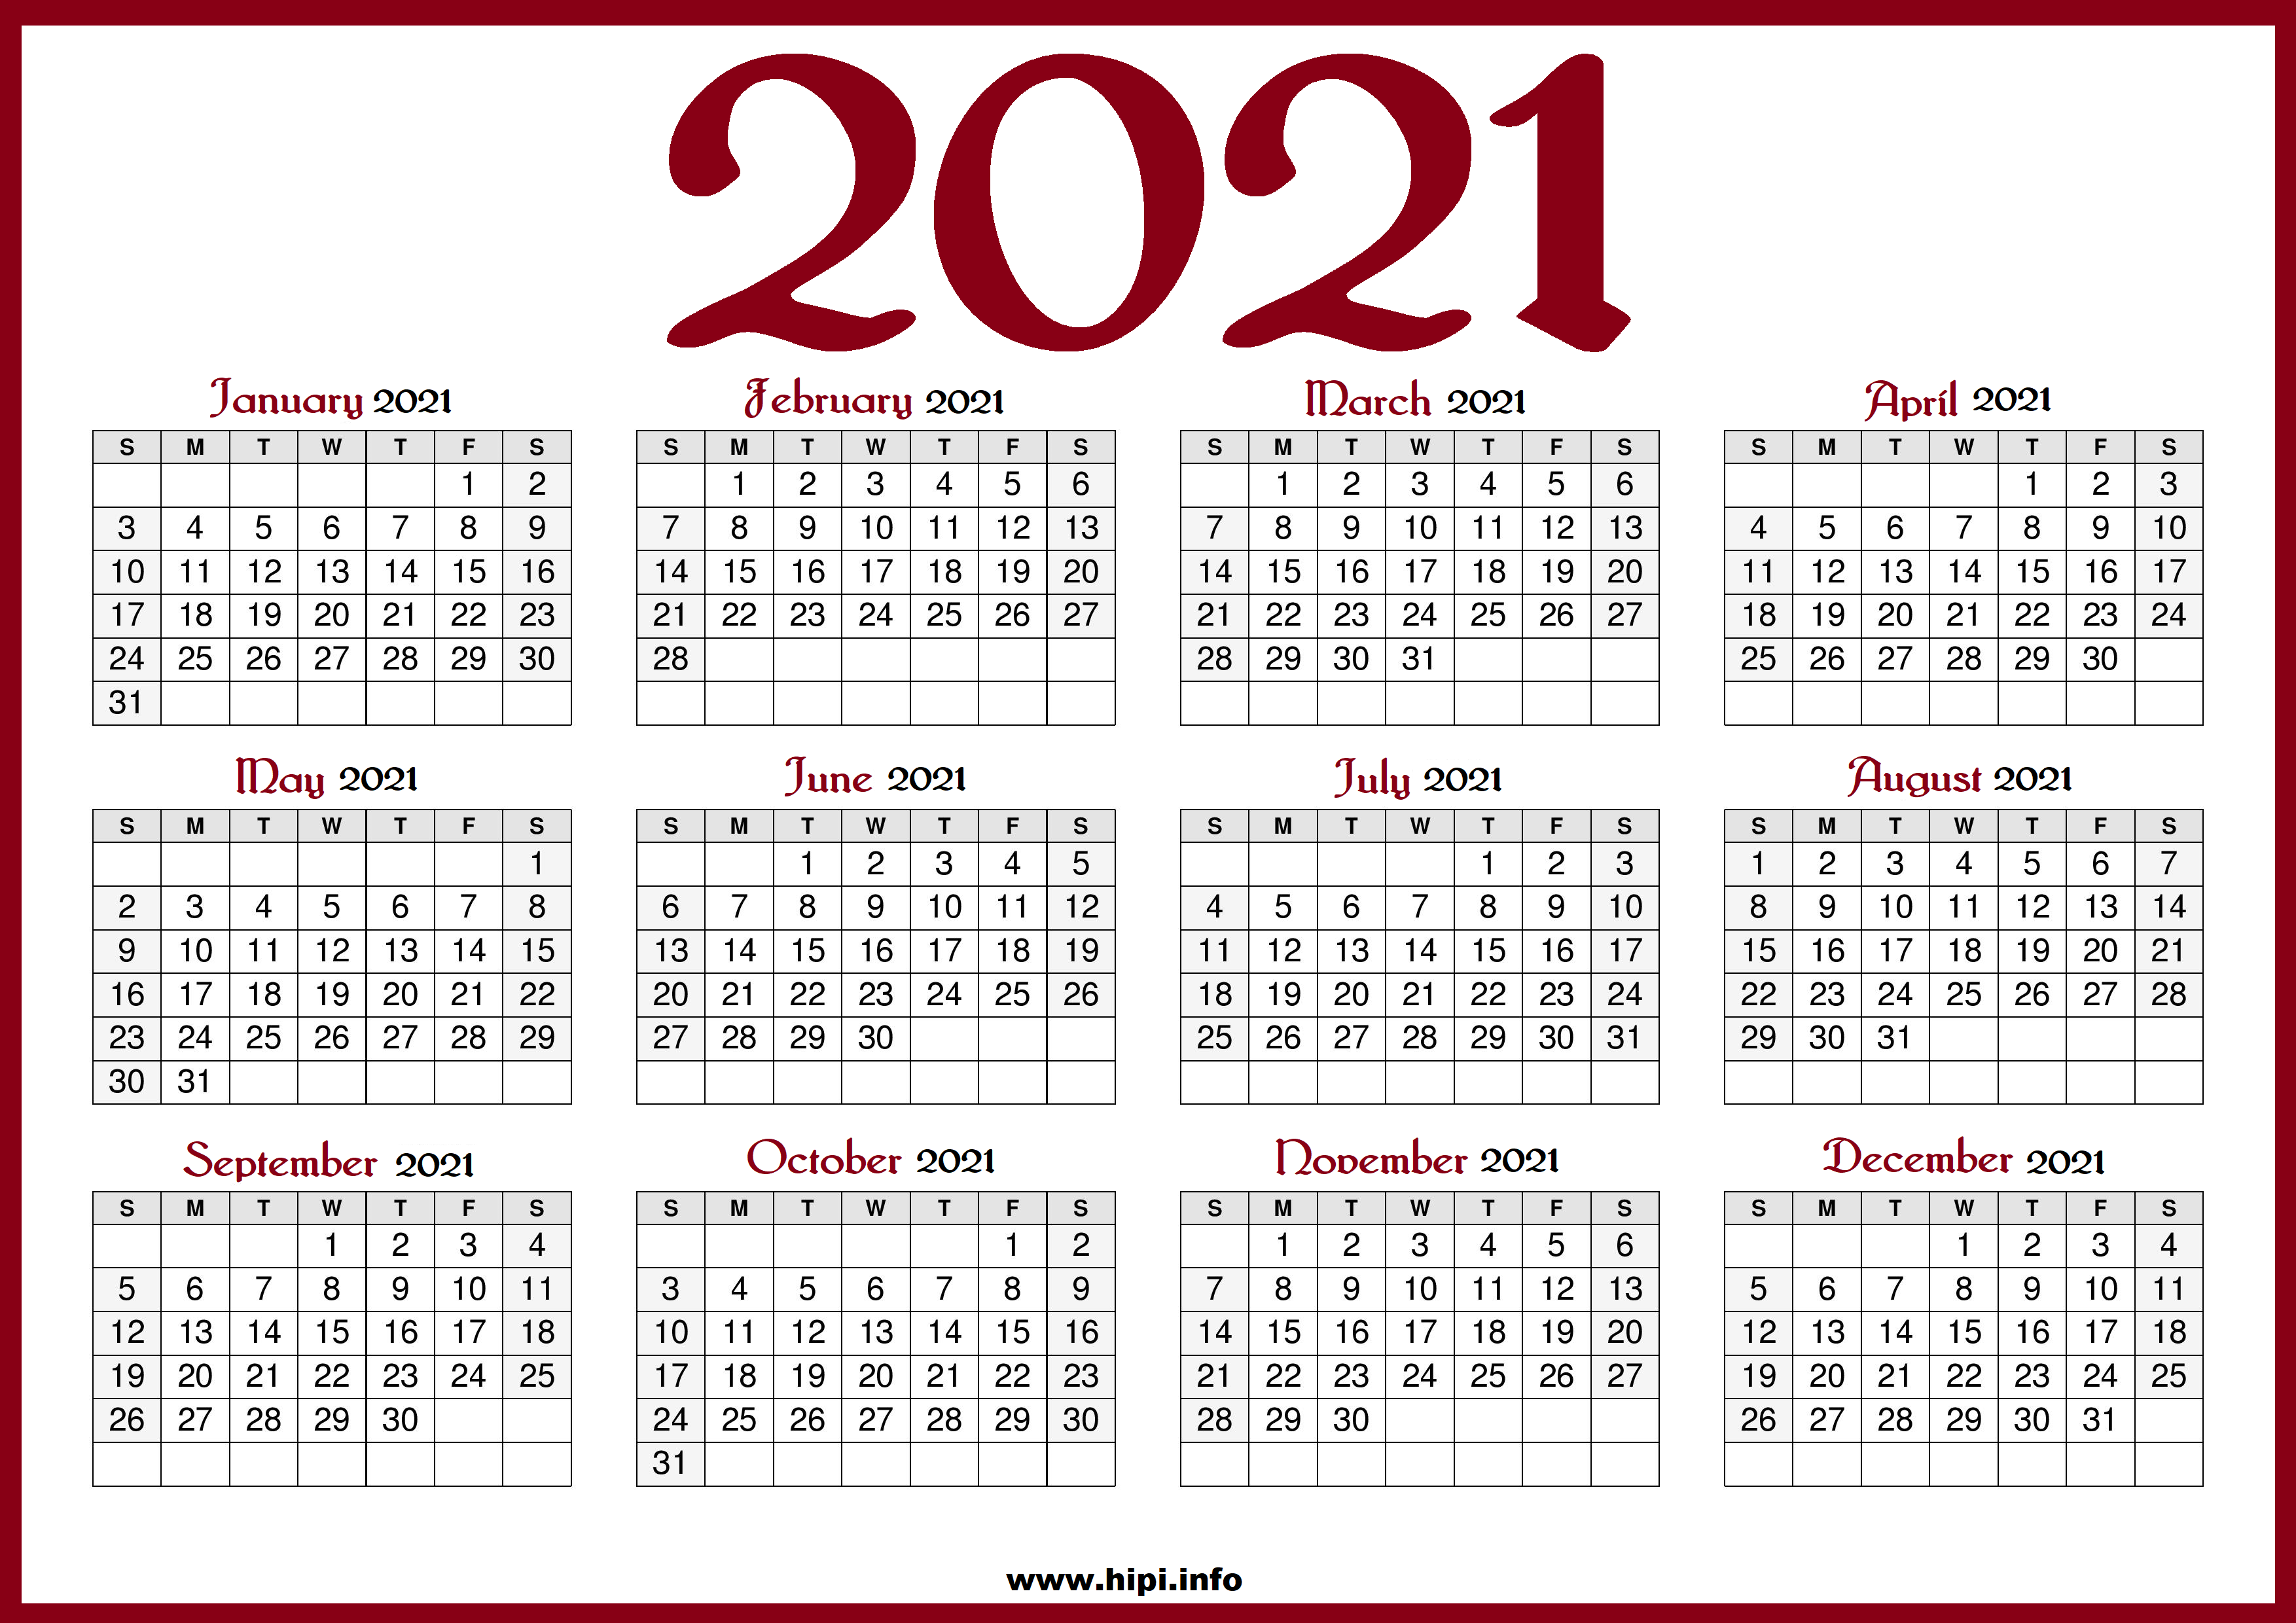 2021 Year Calendar With Holidays - February 2021